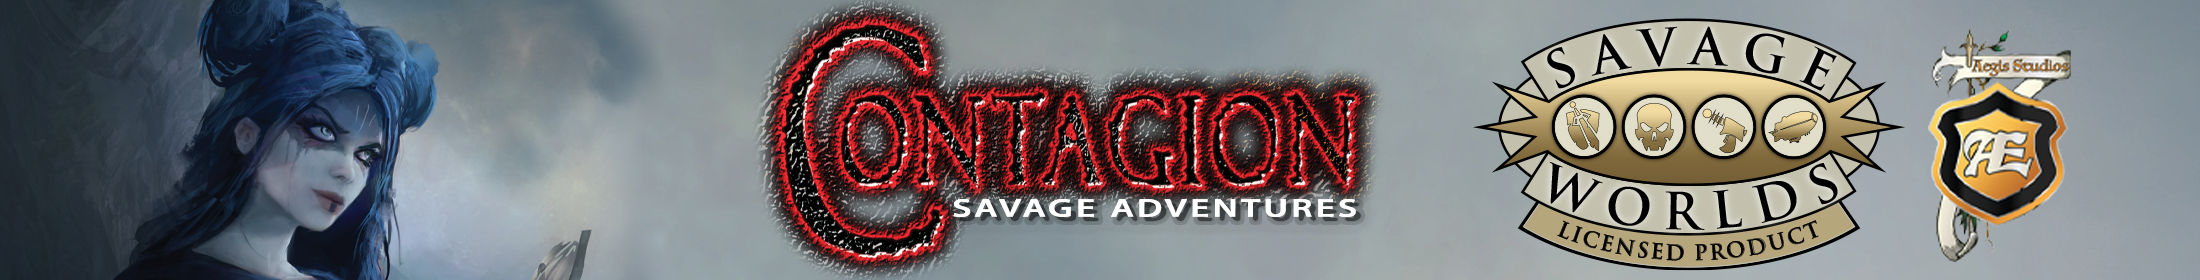 Contagion Savage Adventures